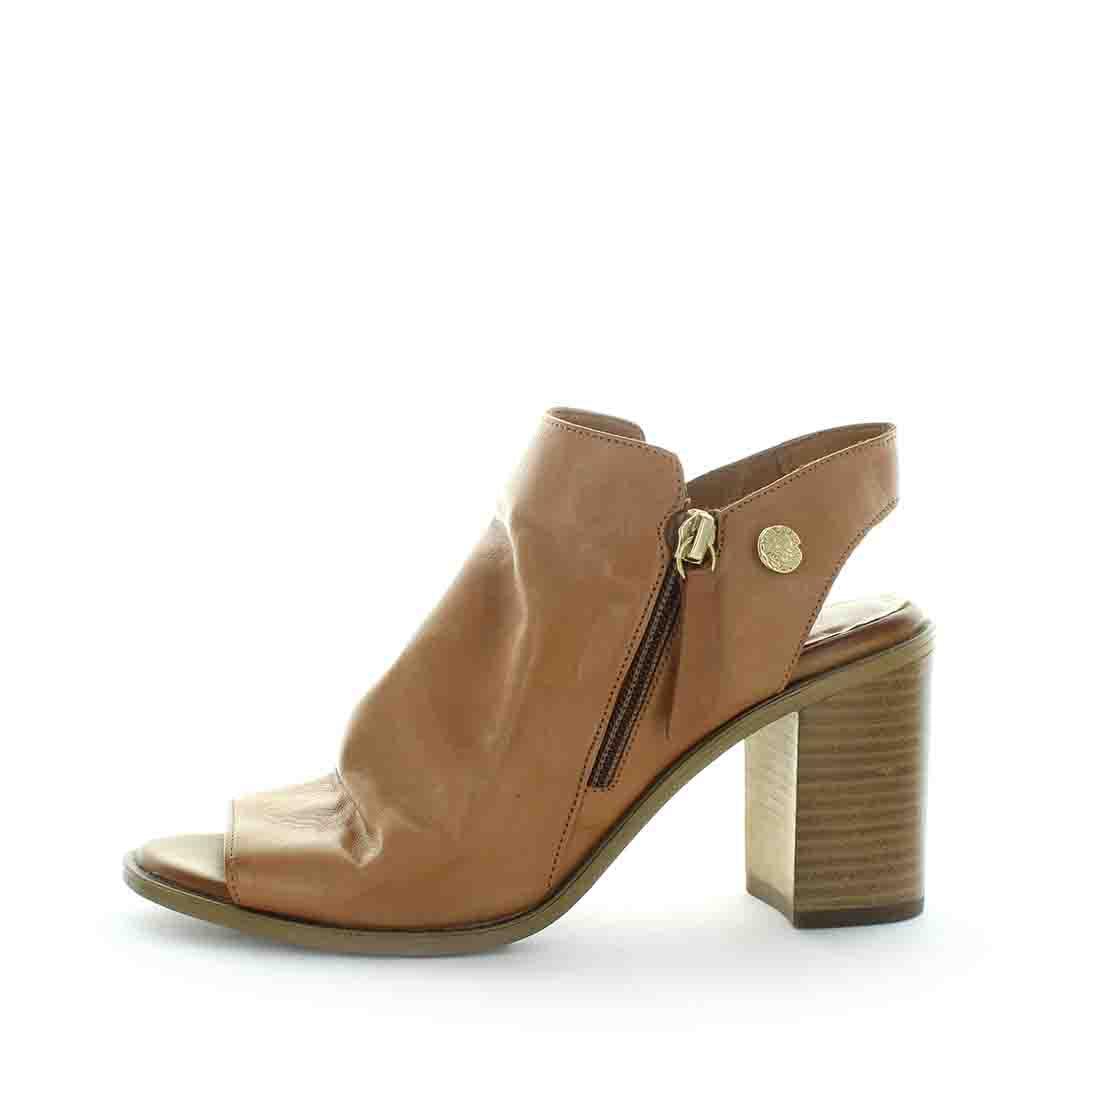 HACHEL by ZOLA - iShoes - NEW ARRIVALS, What's New, What's New: Most Popular, What's New: Women's New Arrivals, Women's Shoes: Heels, Women's Shoes: Sandals - FOOTWEAR-FOOTWEAR